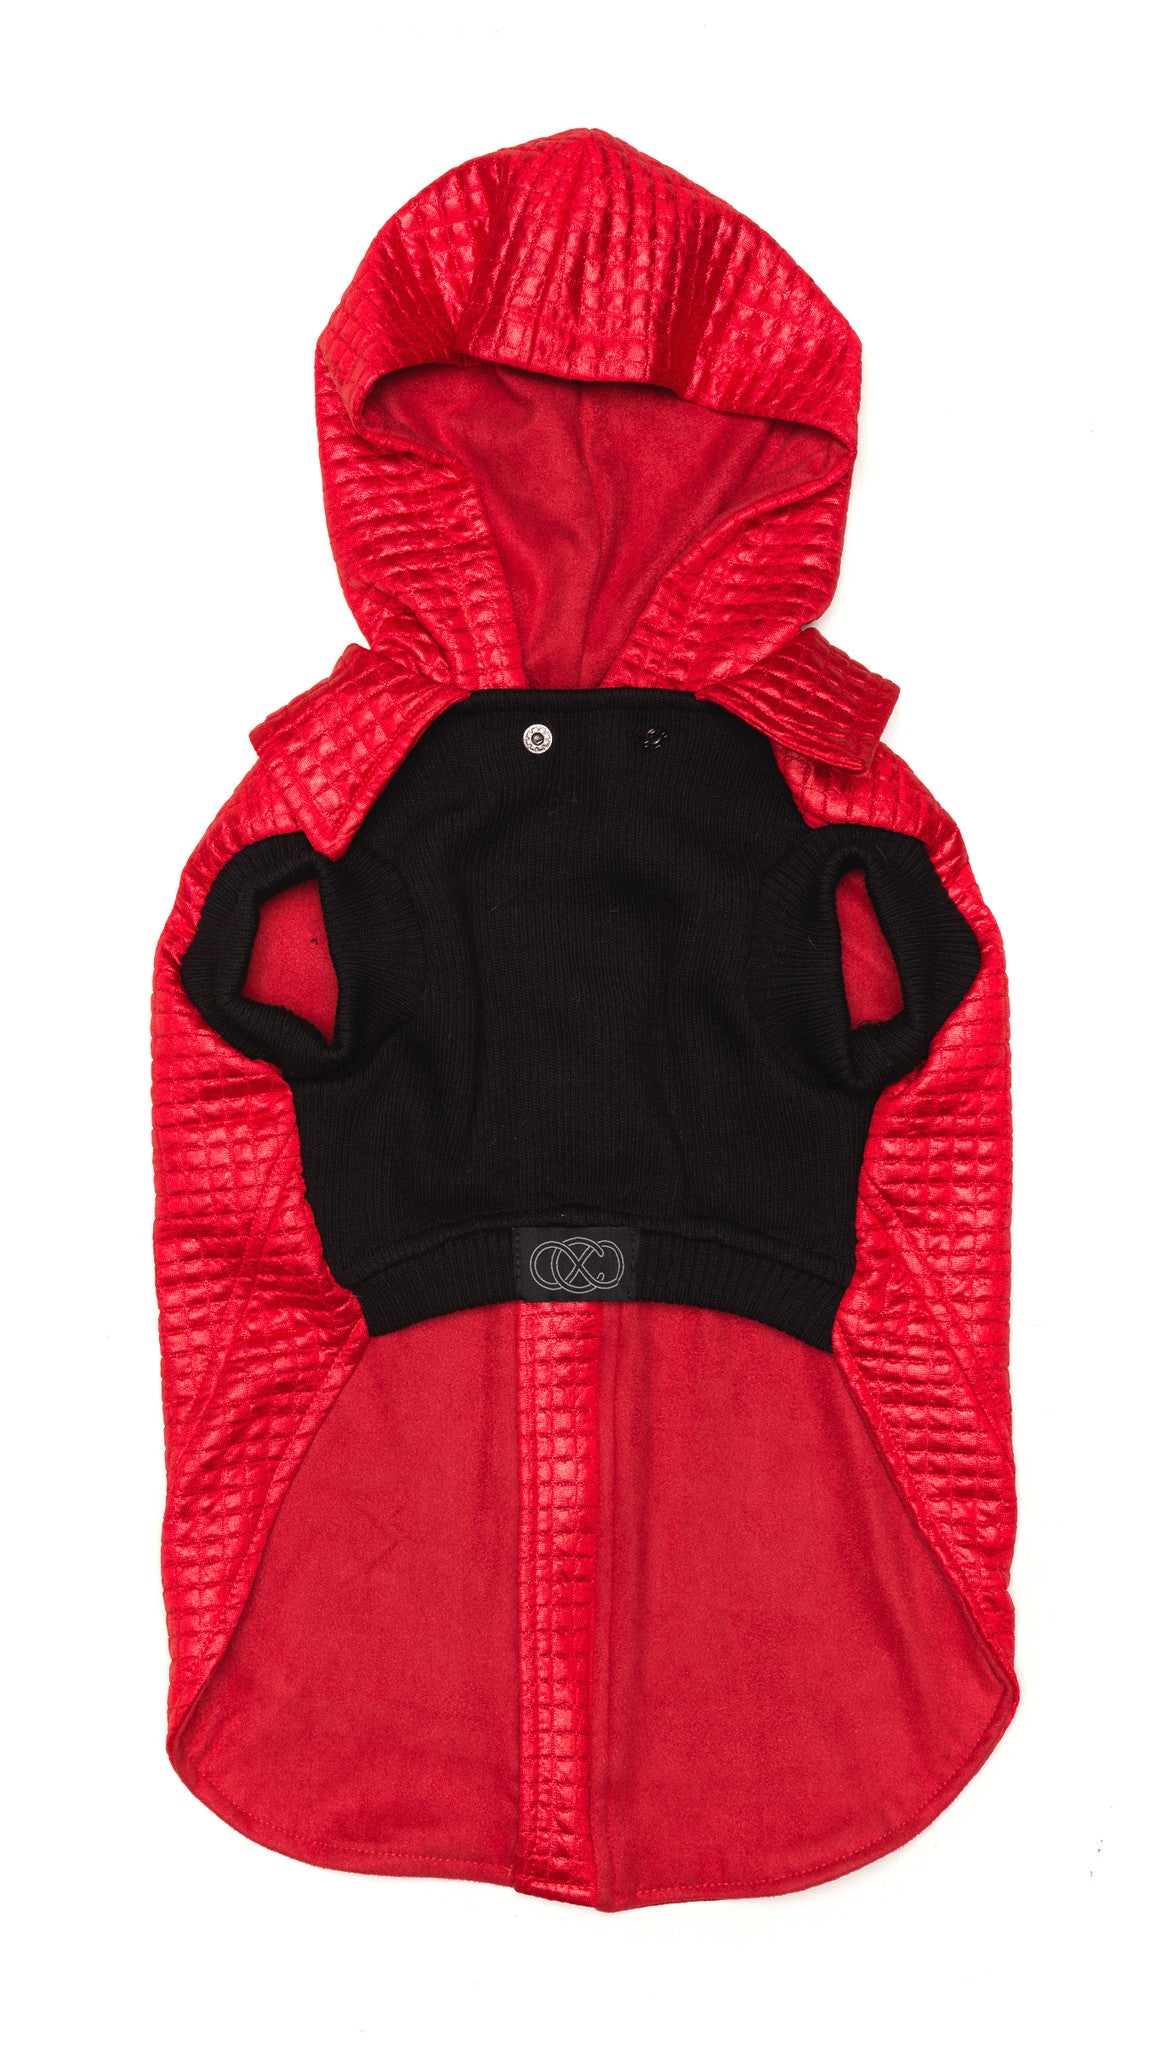 Red Dog Jacket | Lil Rocknhood Dog Coat | Zip Through